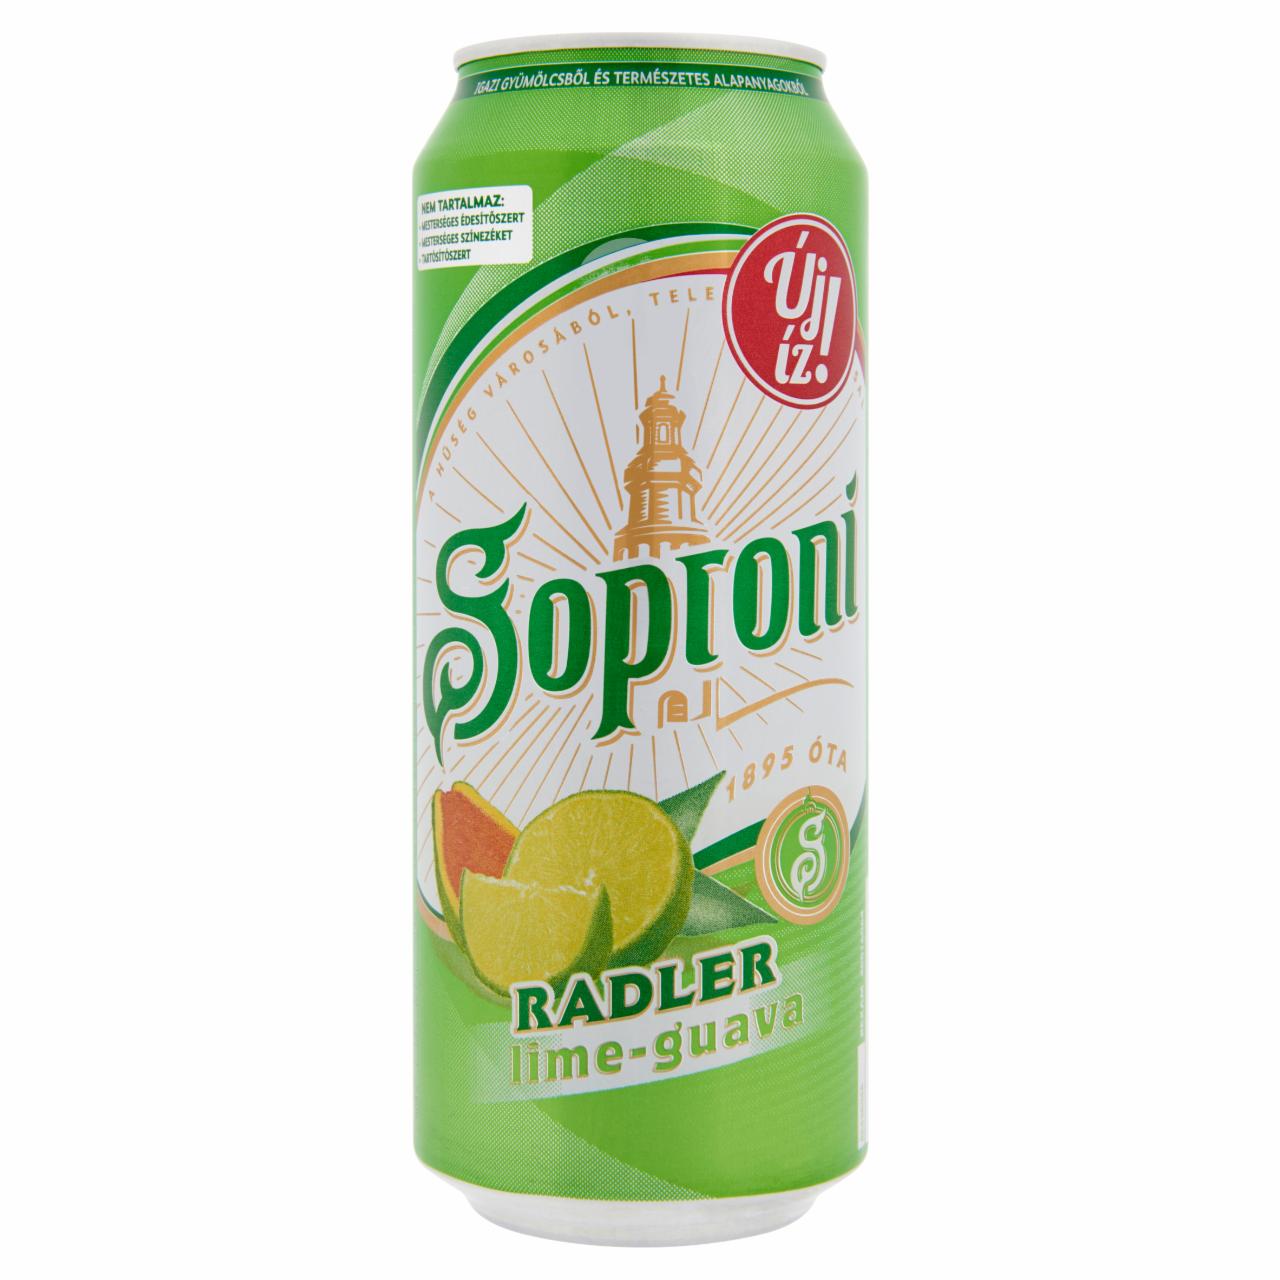 Képek - Soproni Radler lime-guavás sörital 2,0% 0,5 l